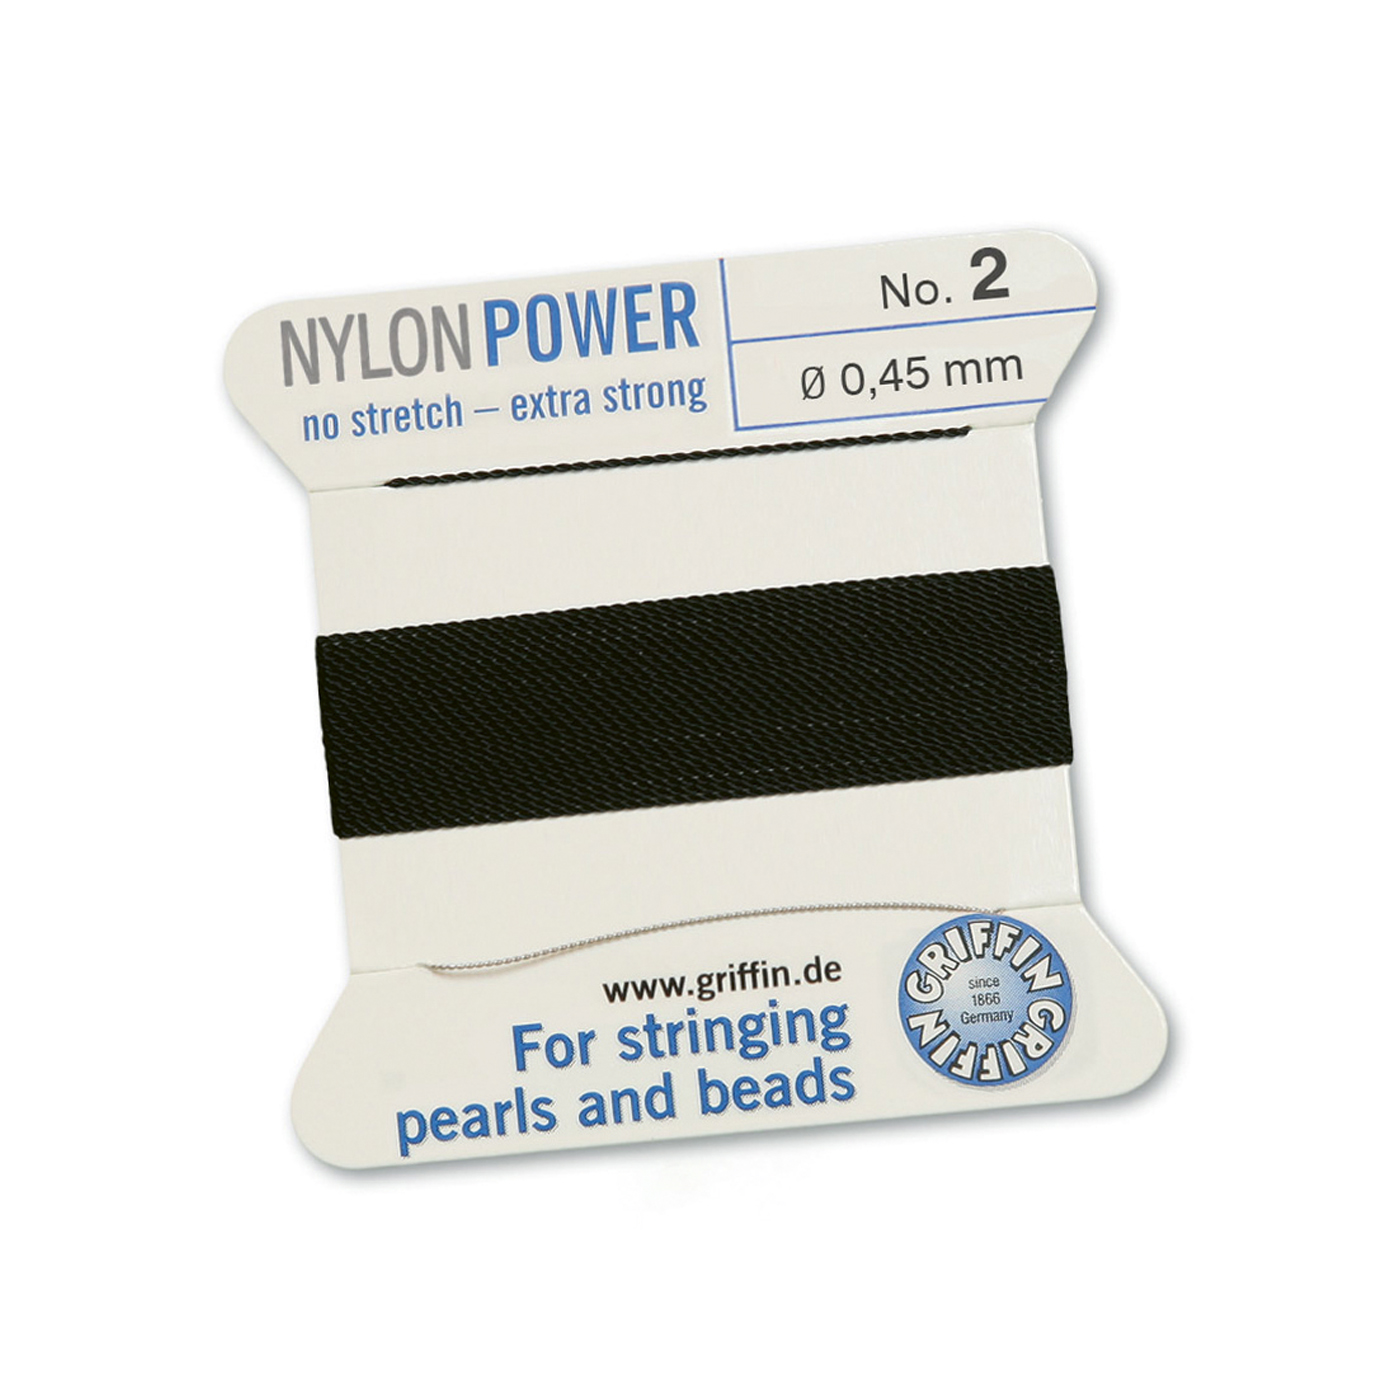 Bead Cord NylonPower, Black, No. 2 - 2 m